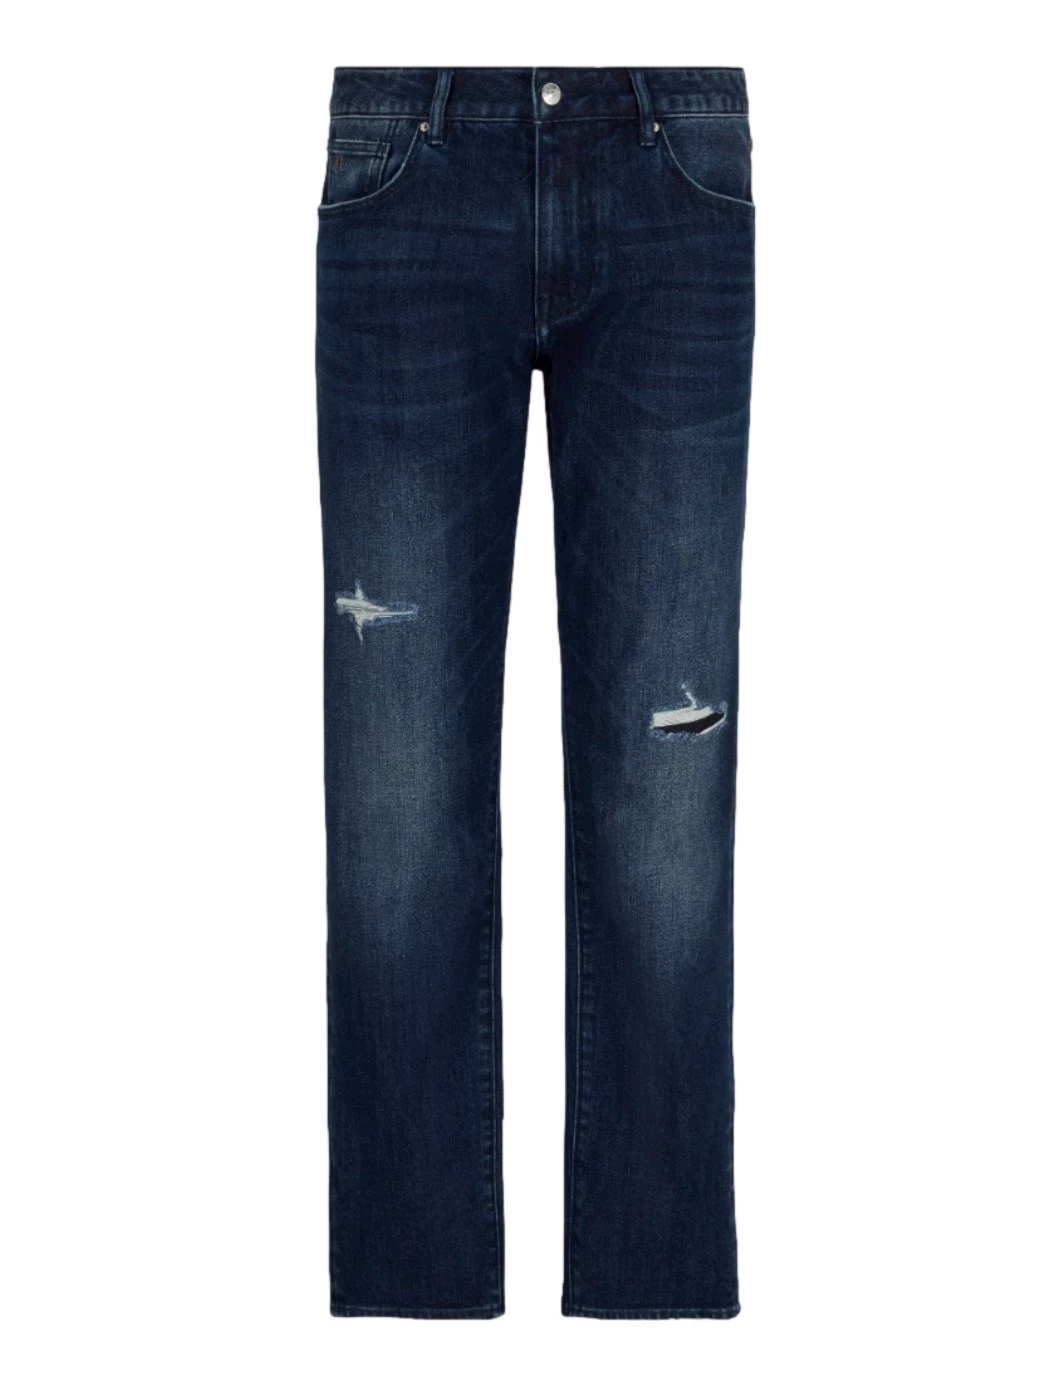 Jeans slim Armani xchange